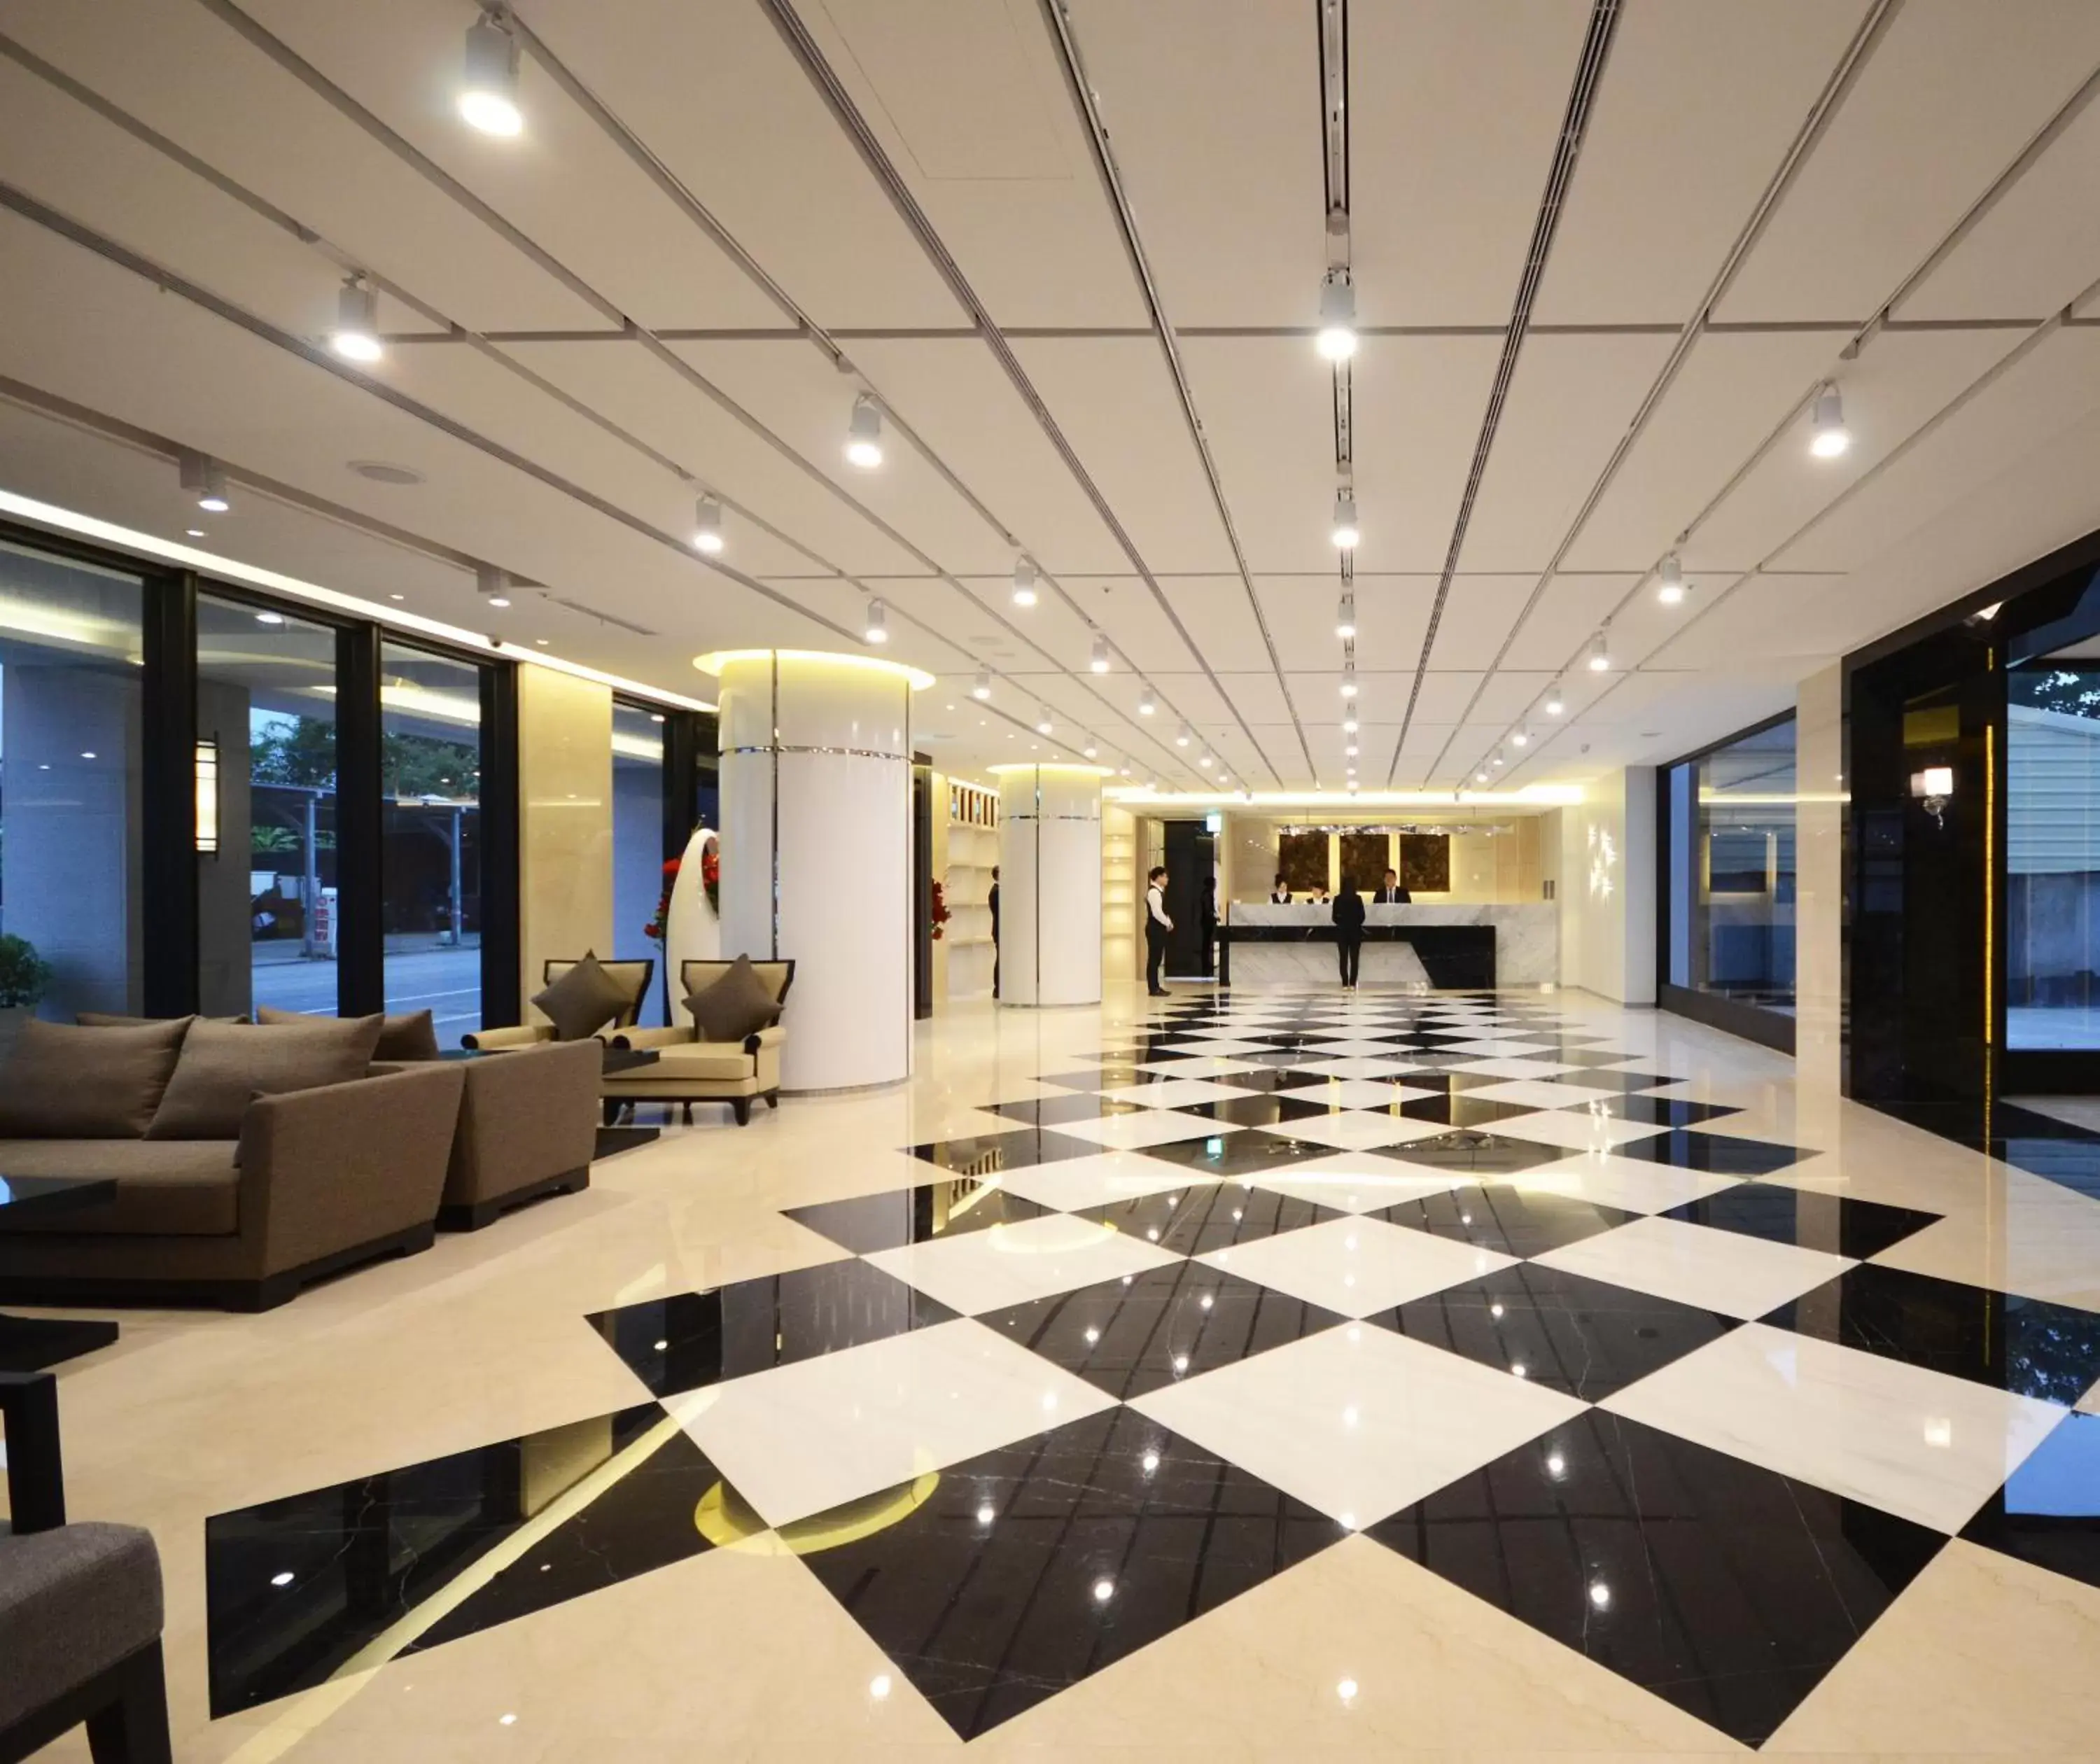 Lobby or reception in Shiny Ocean Hotel